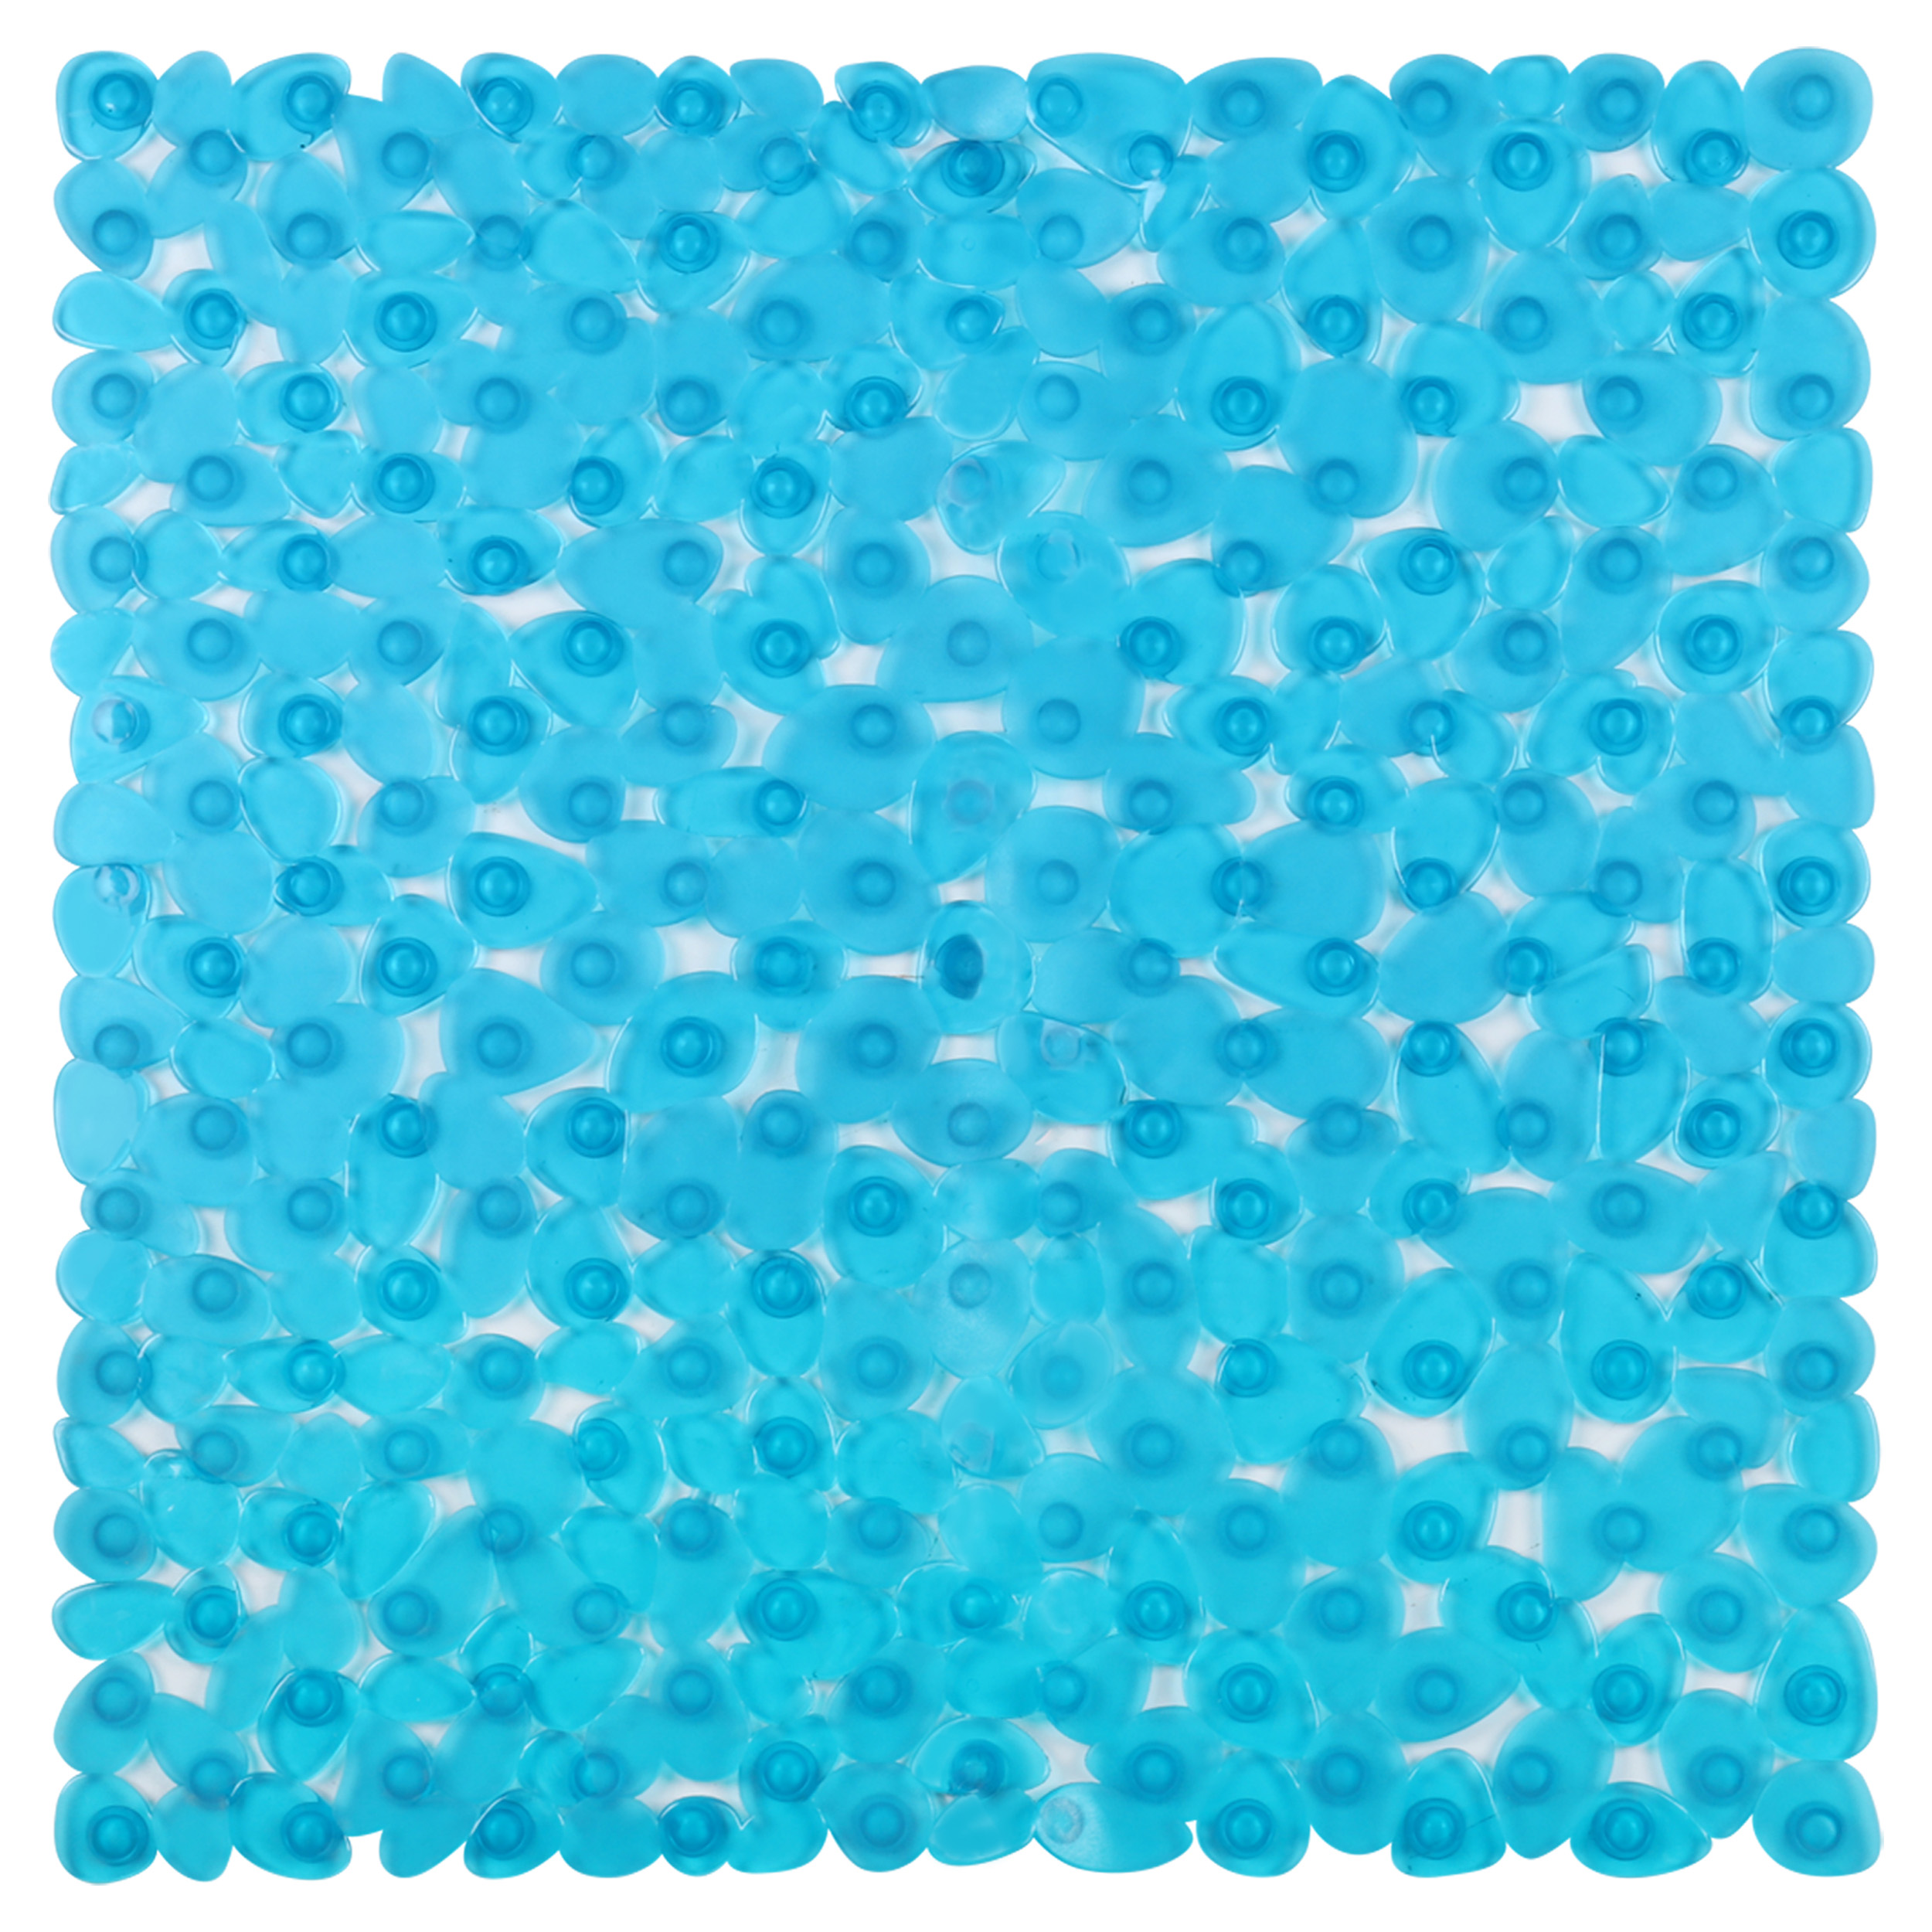 31.002.02 Differnz Lapis inlegmat douche - 100% PVC - anti-slip laag - 54 x 54 cm - blauw transparant